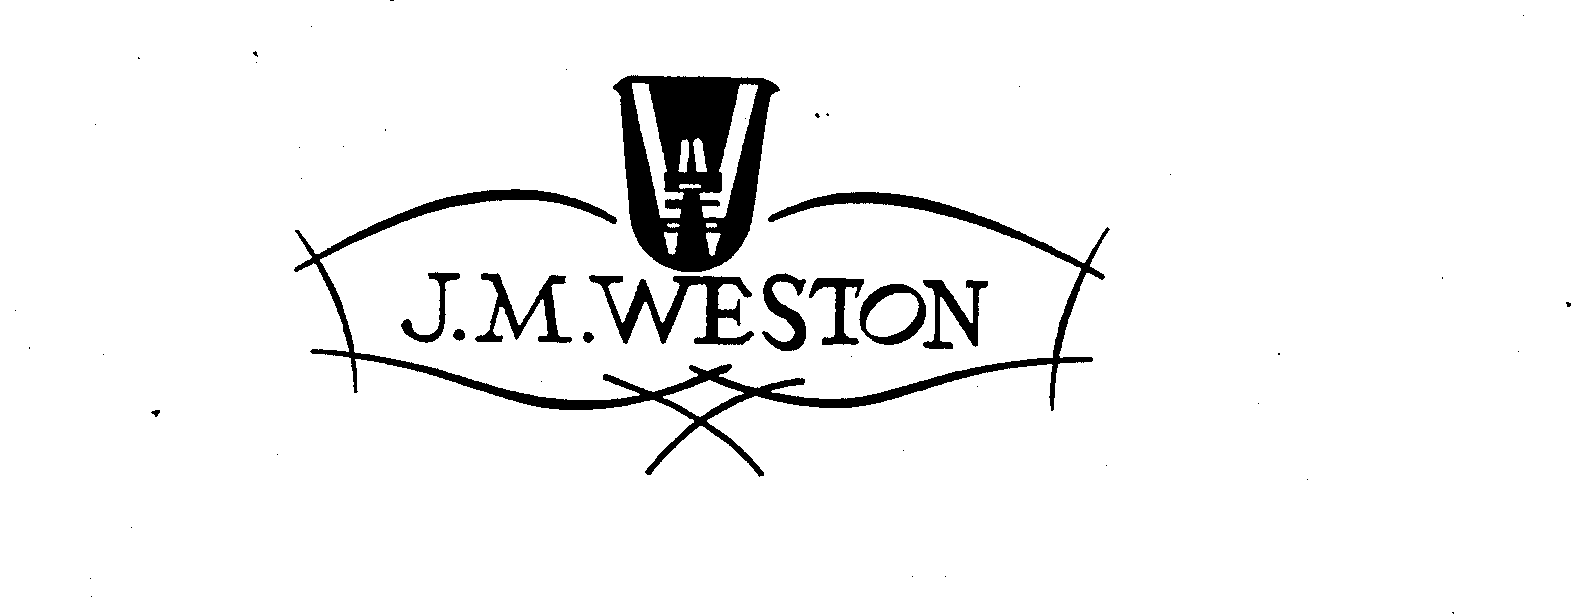  J.M. WESTON